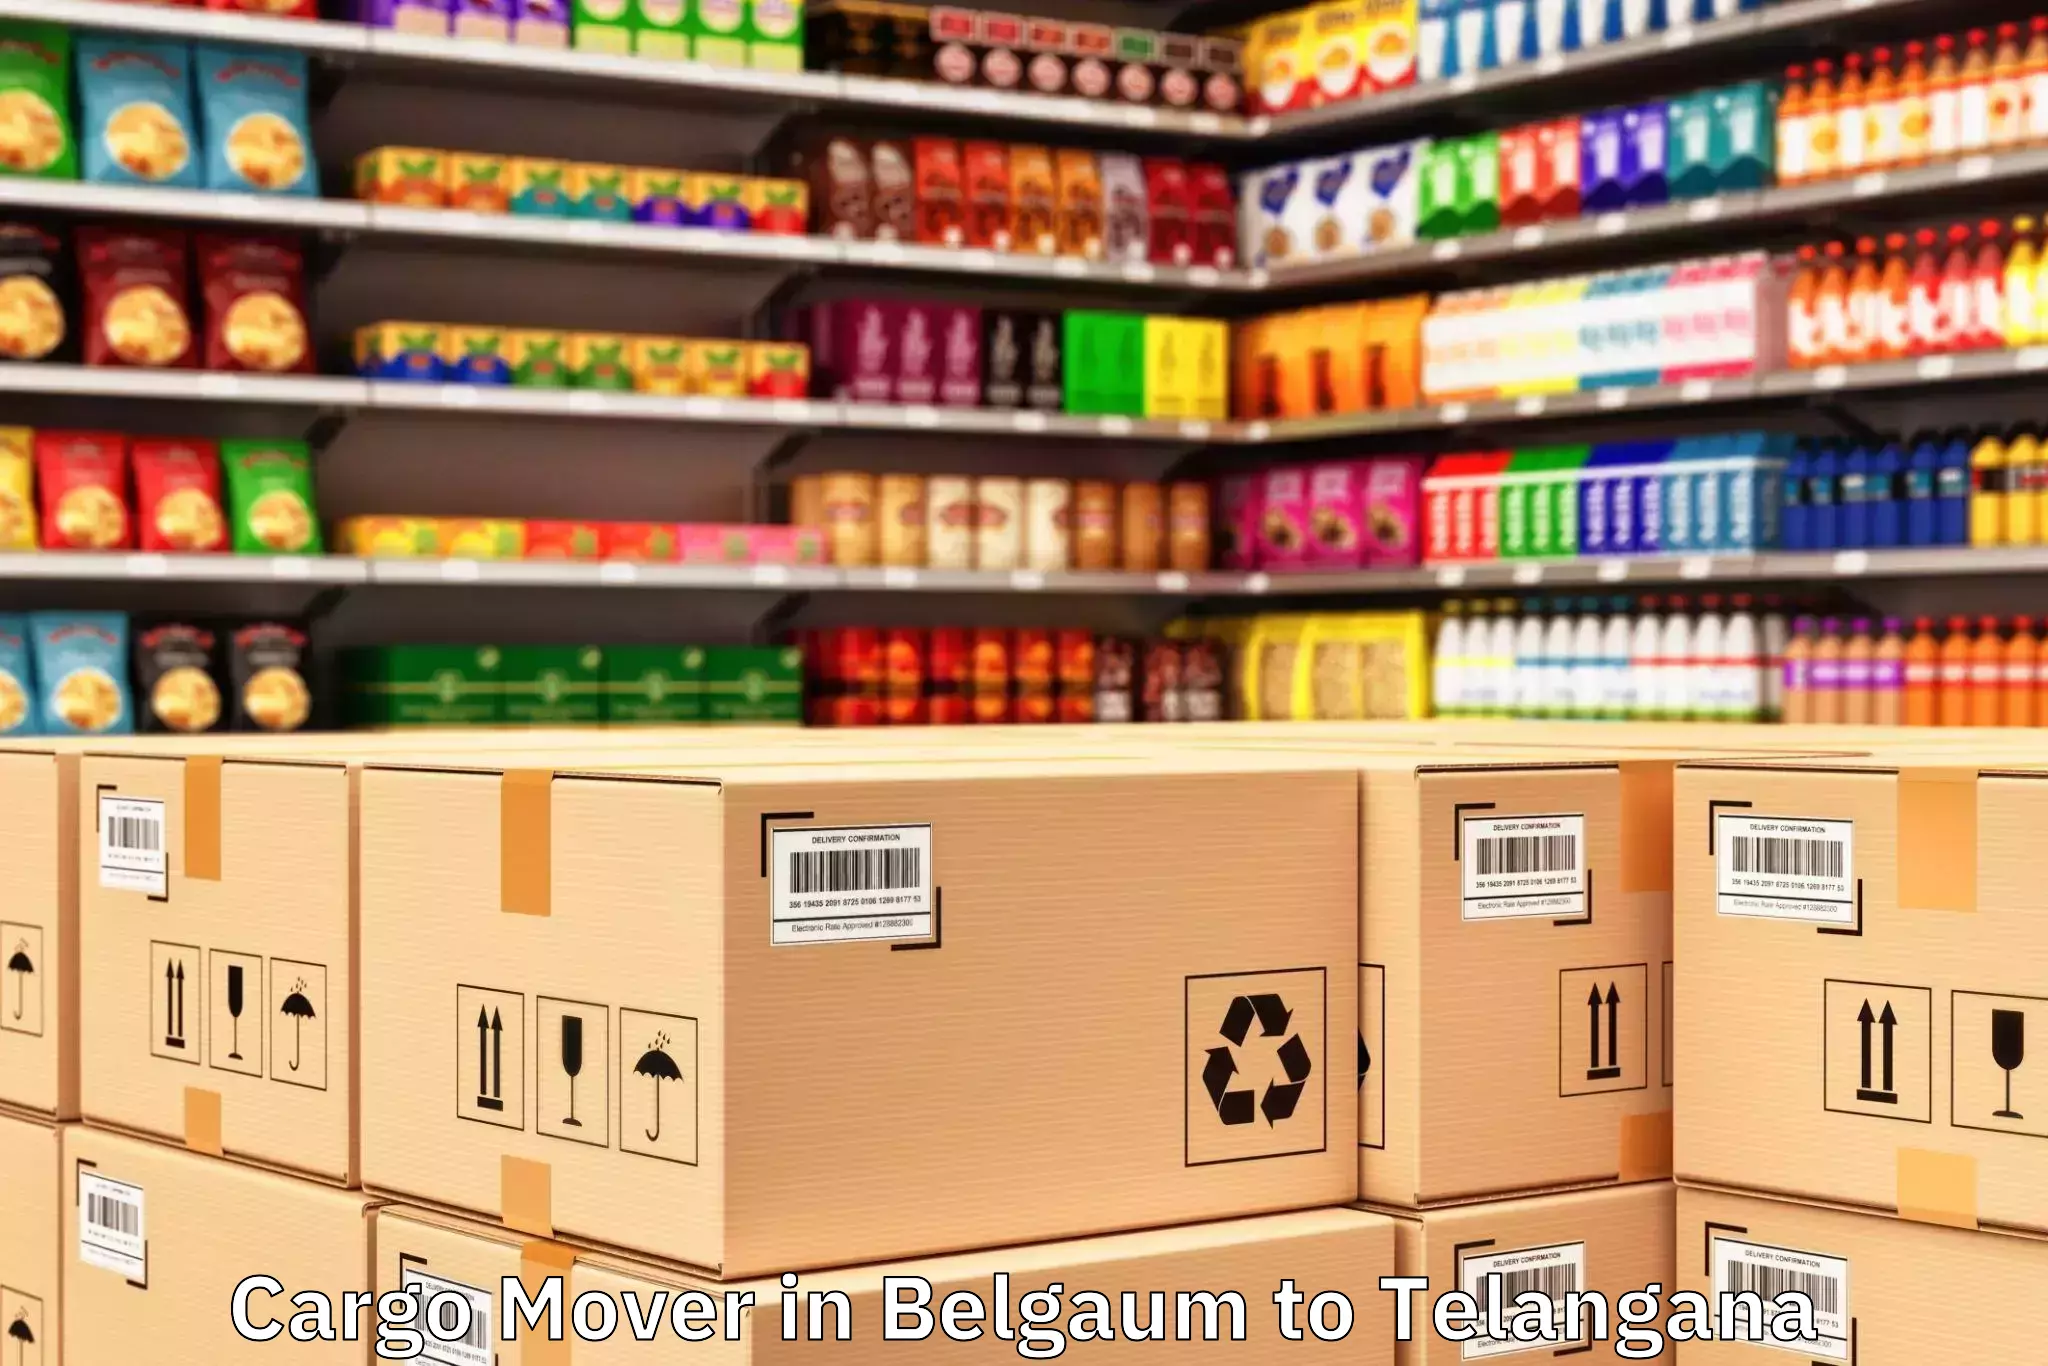 Reliable Belgaum to Kangal Cargo Mover